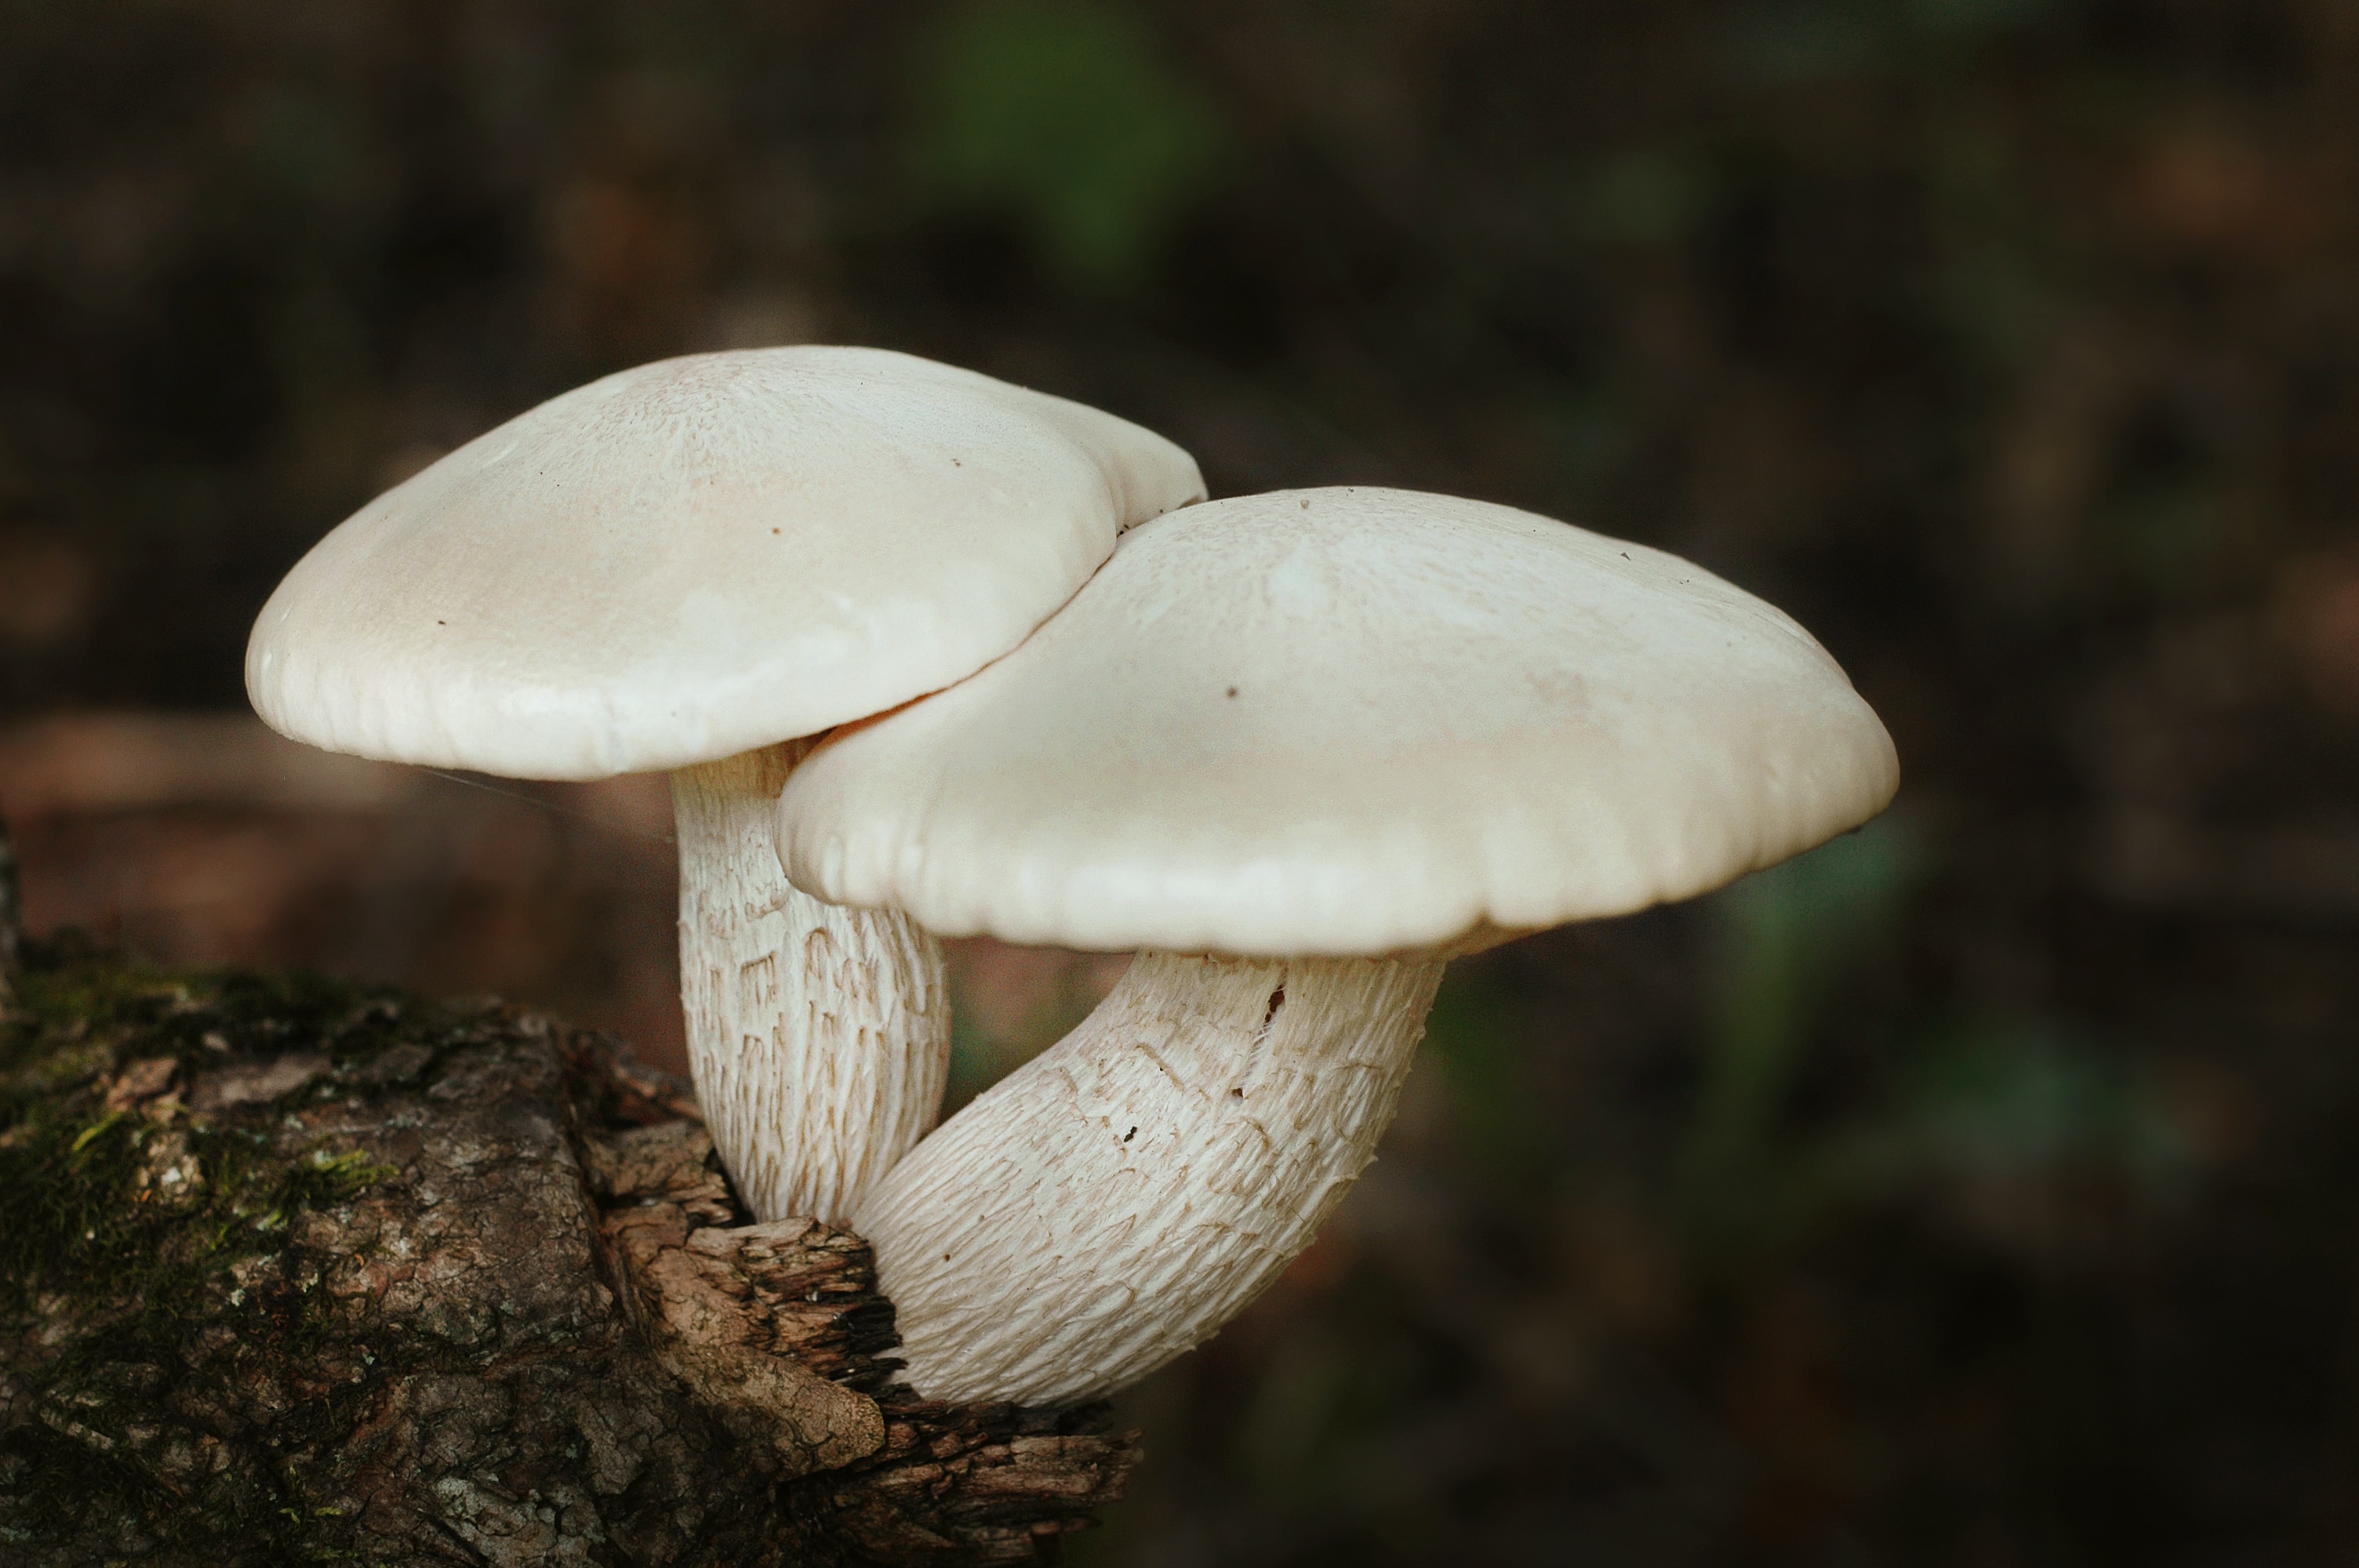 Do mushroom supplements help with hair growth?